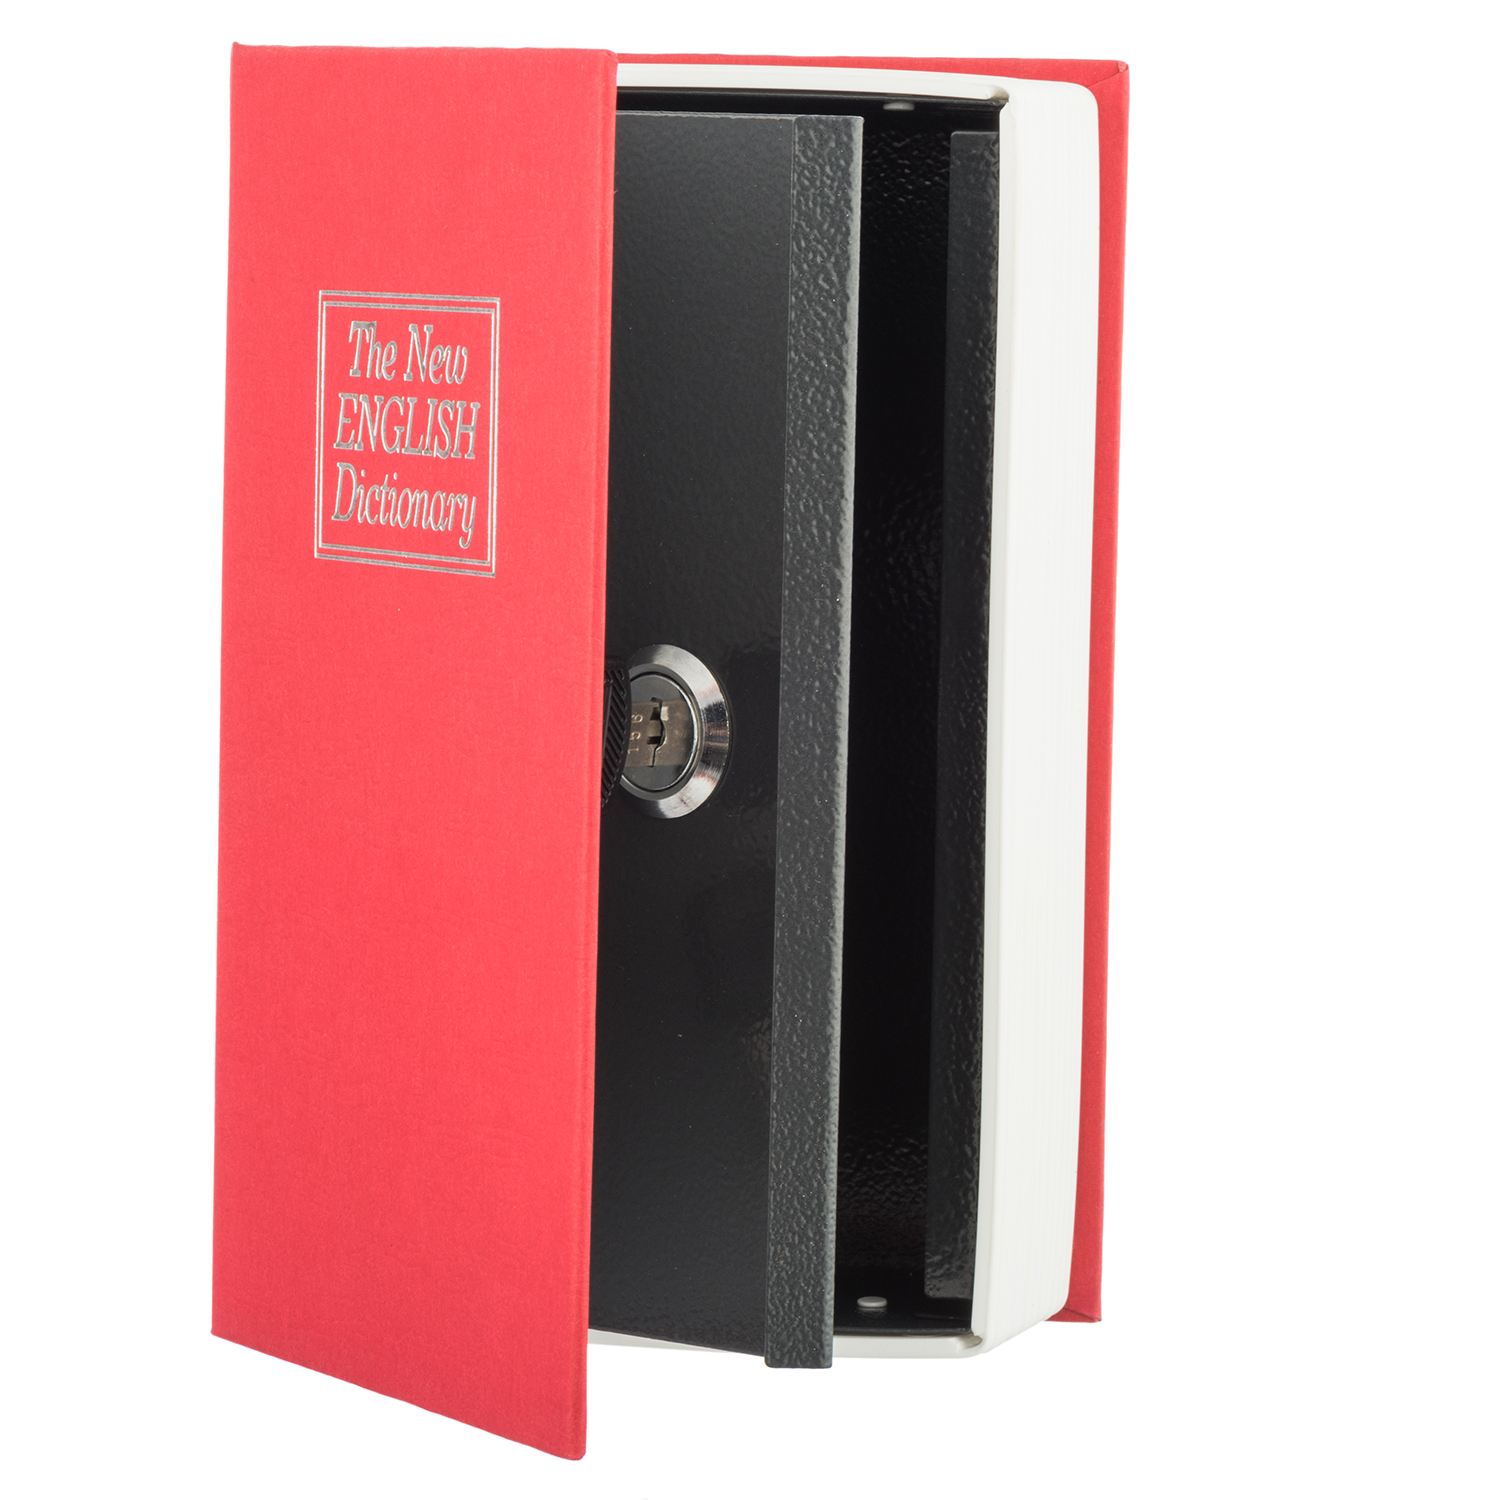 Seif Model Dictionar Carte Mare, cu o Cutie Secreta, Metalic, 270 x 70 x 200 mm, Rosu